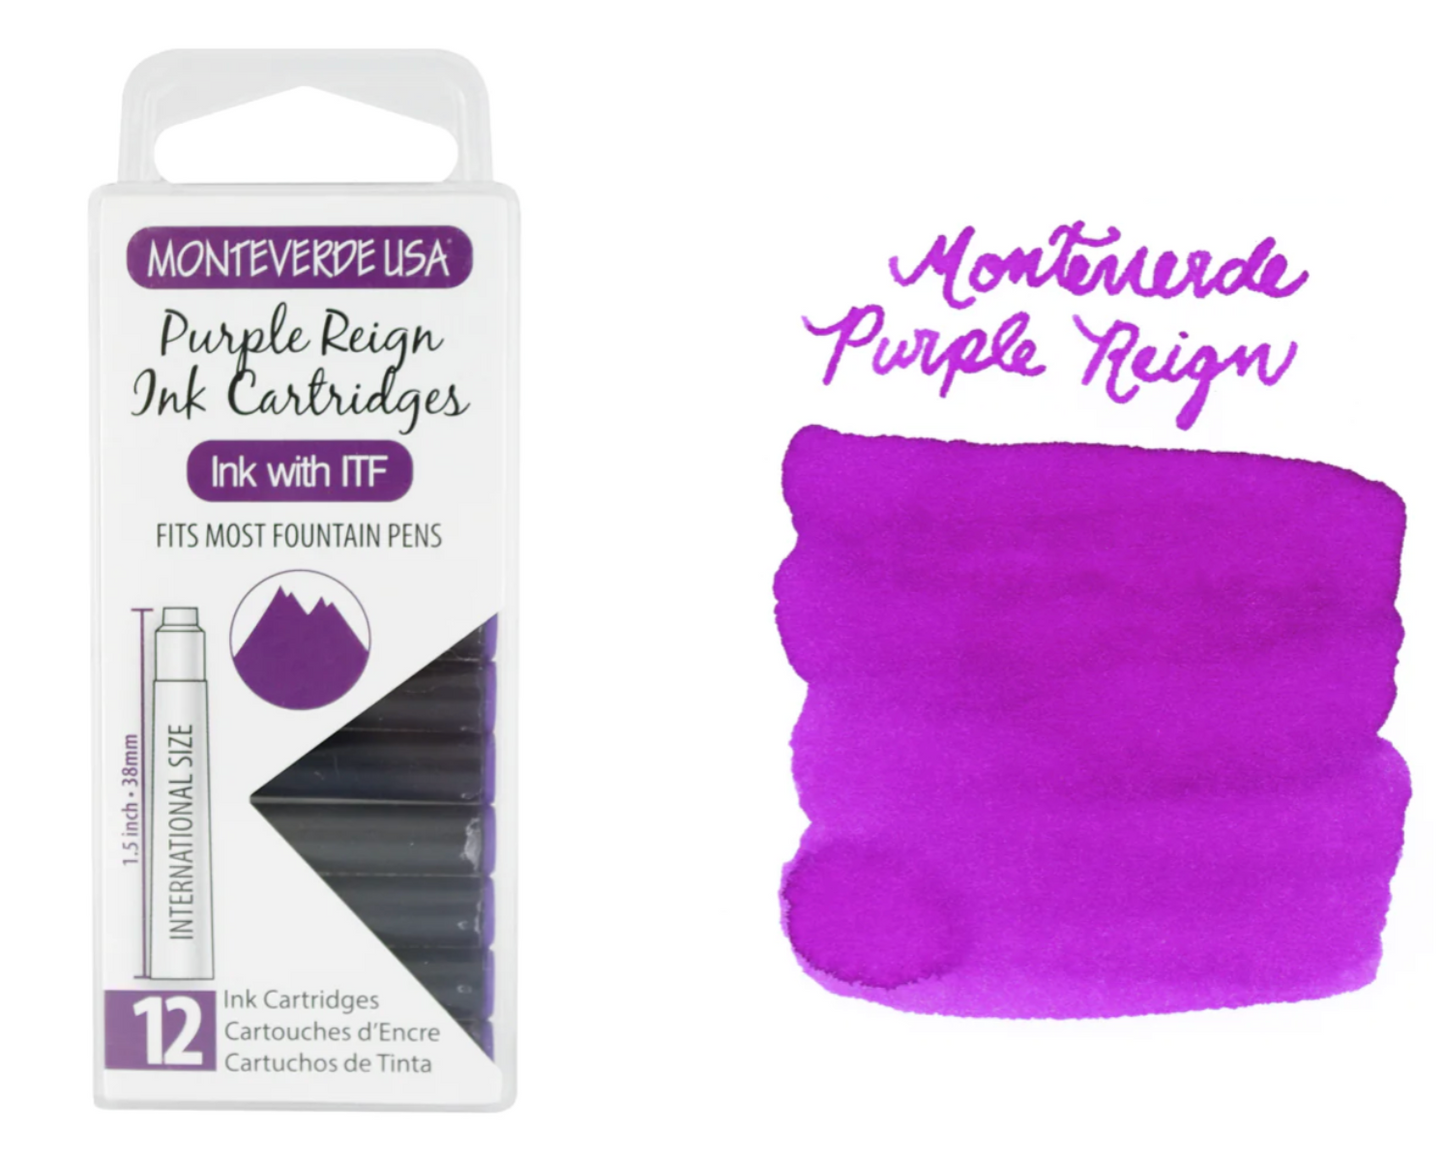 Monteverde Purple Reign Ink Cartridges (Set of 12)